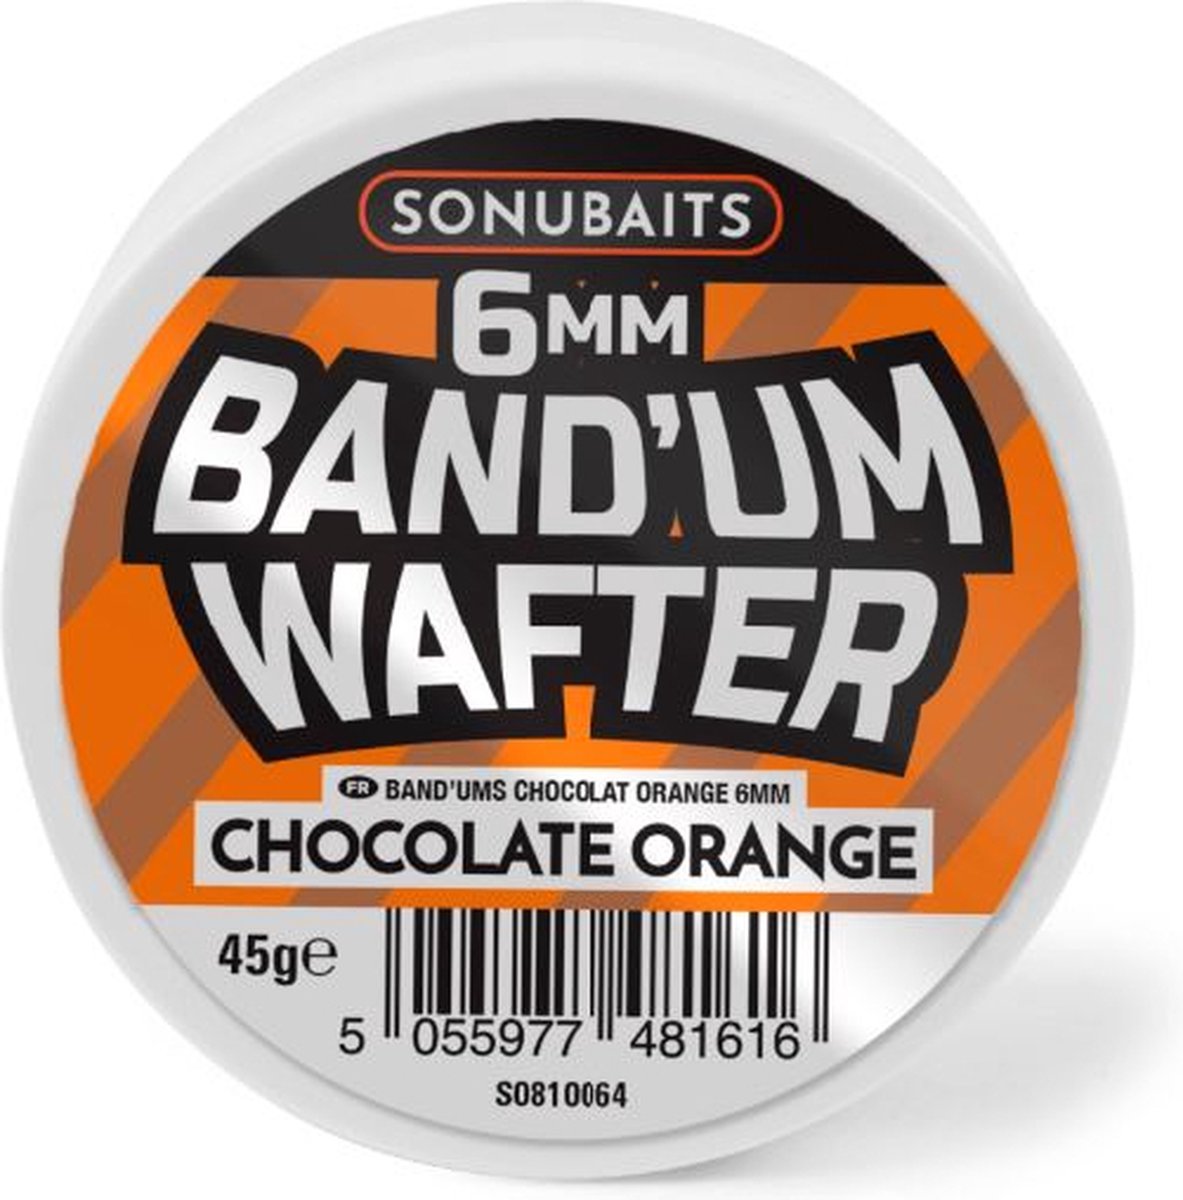 Sonubaits Bandum Wafter Chocolate Orange 6mm | Wafters & Dumbells